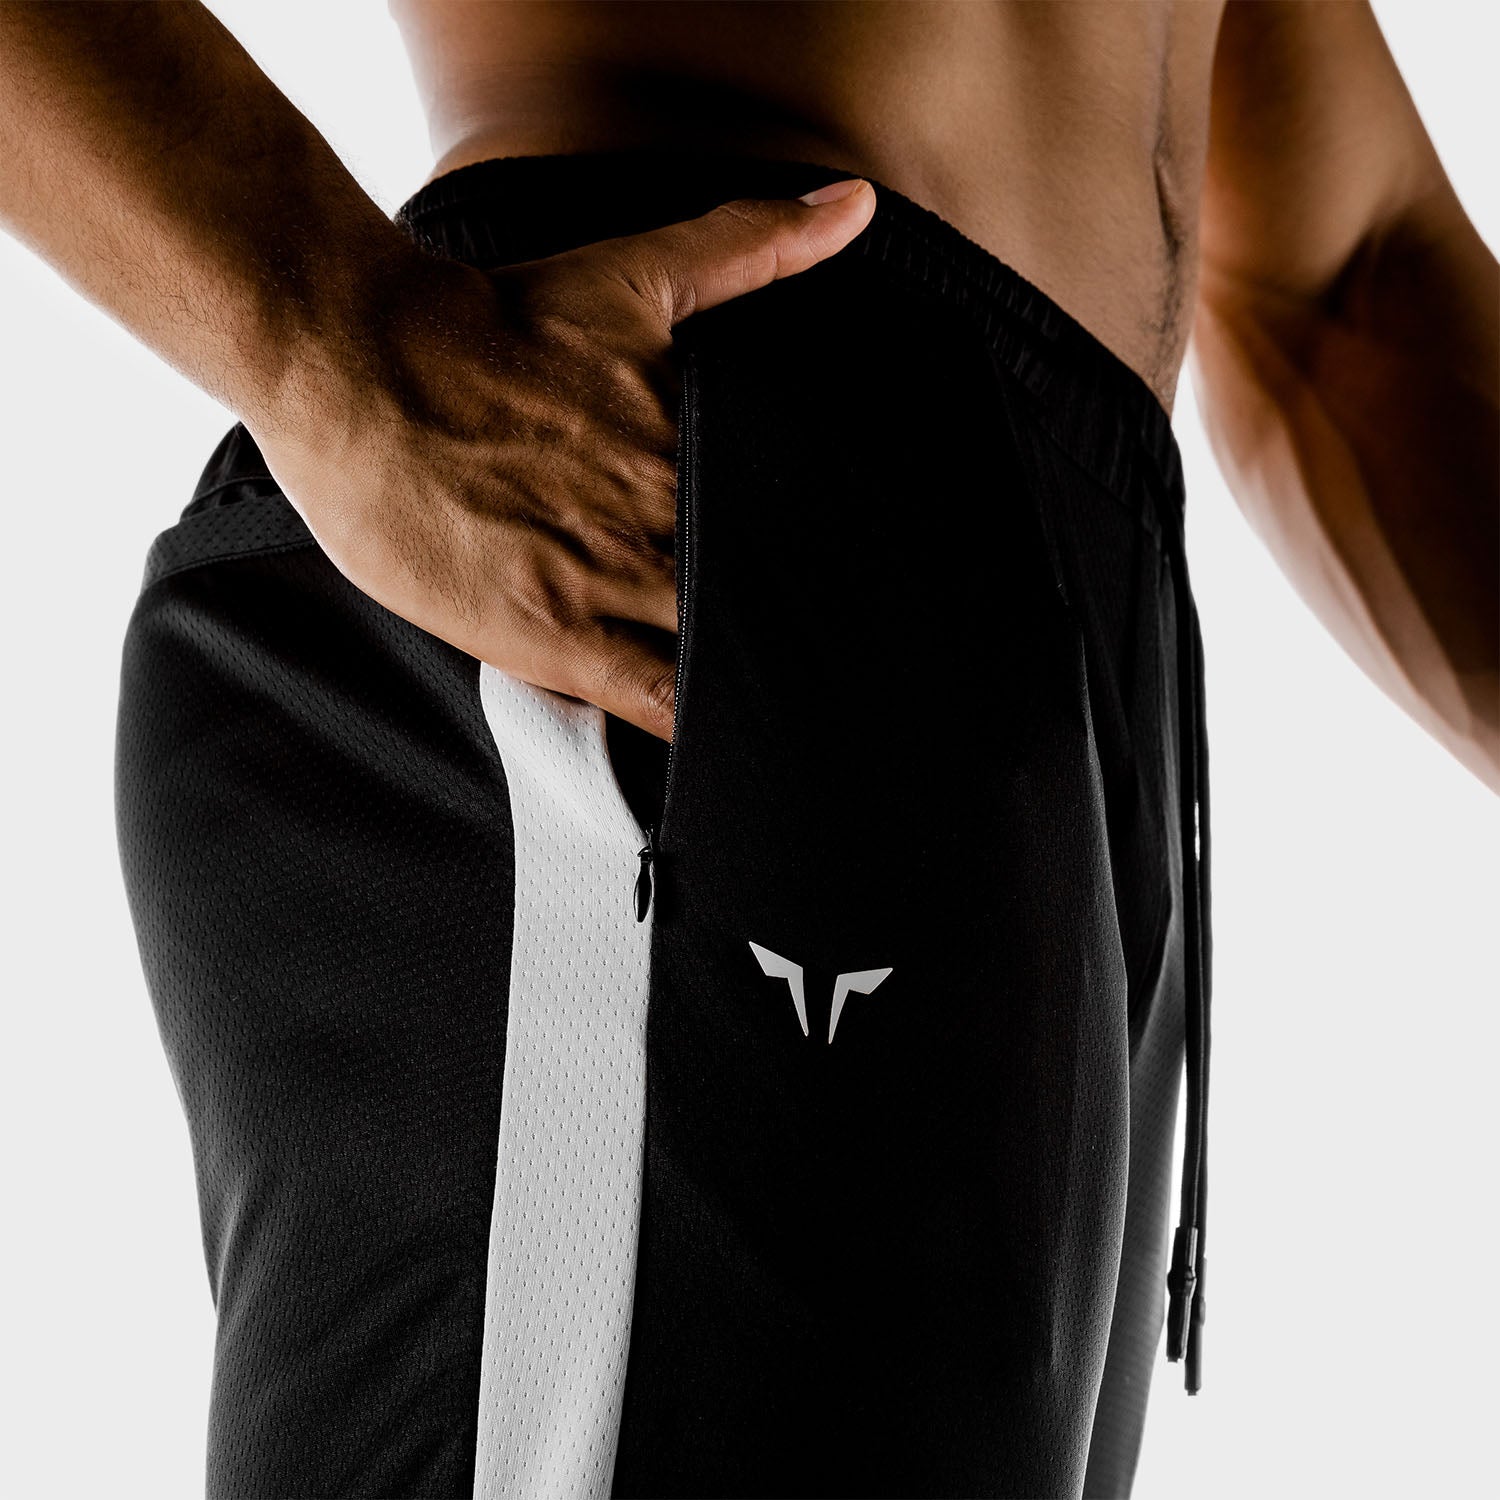 squatwolf-gym-wear-hybrid-2-0-track-pants-black-workout-pants-for-men